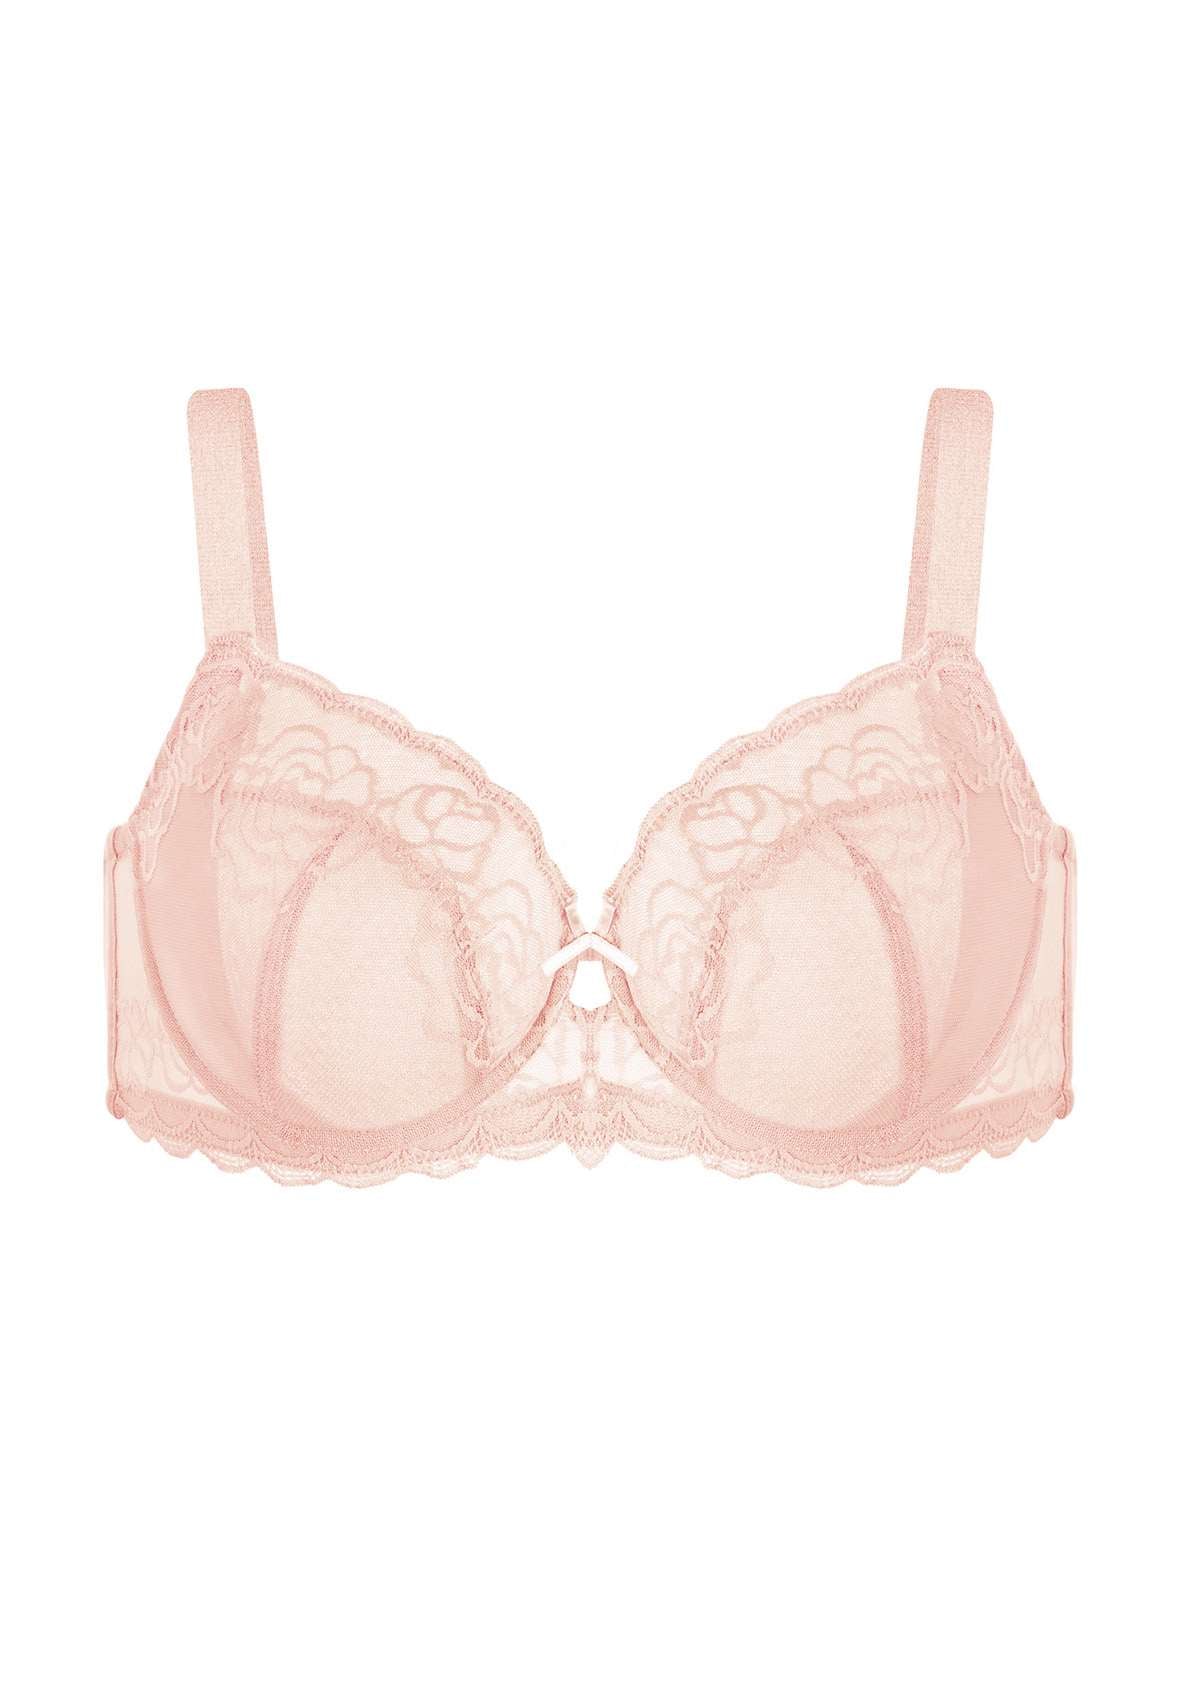 Felancy Women's Lace Bra - Light Peachy Pink, Size 36B